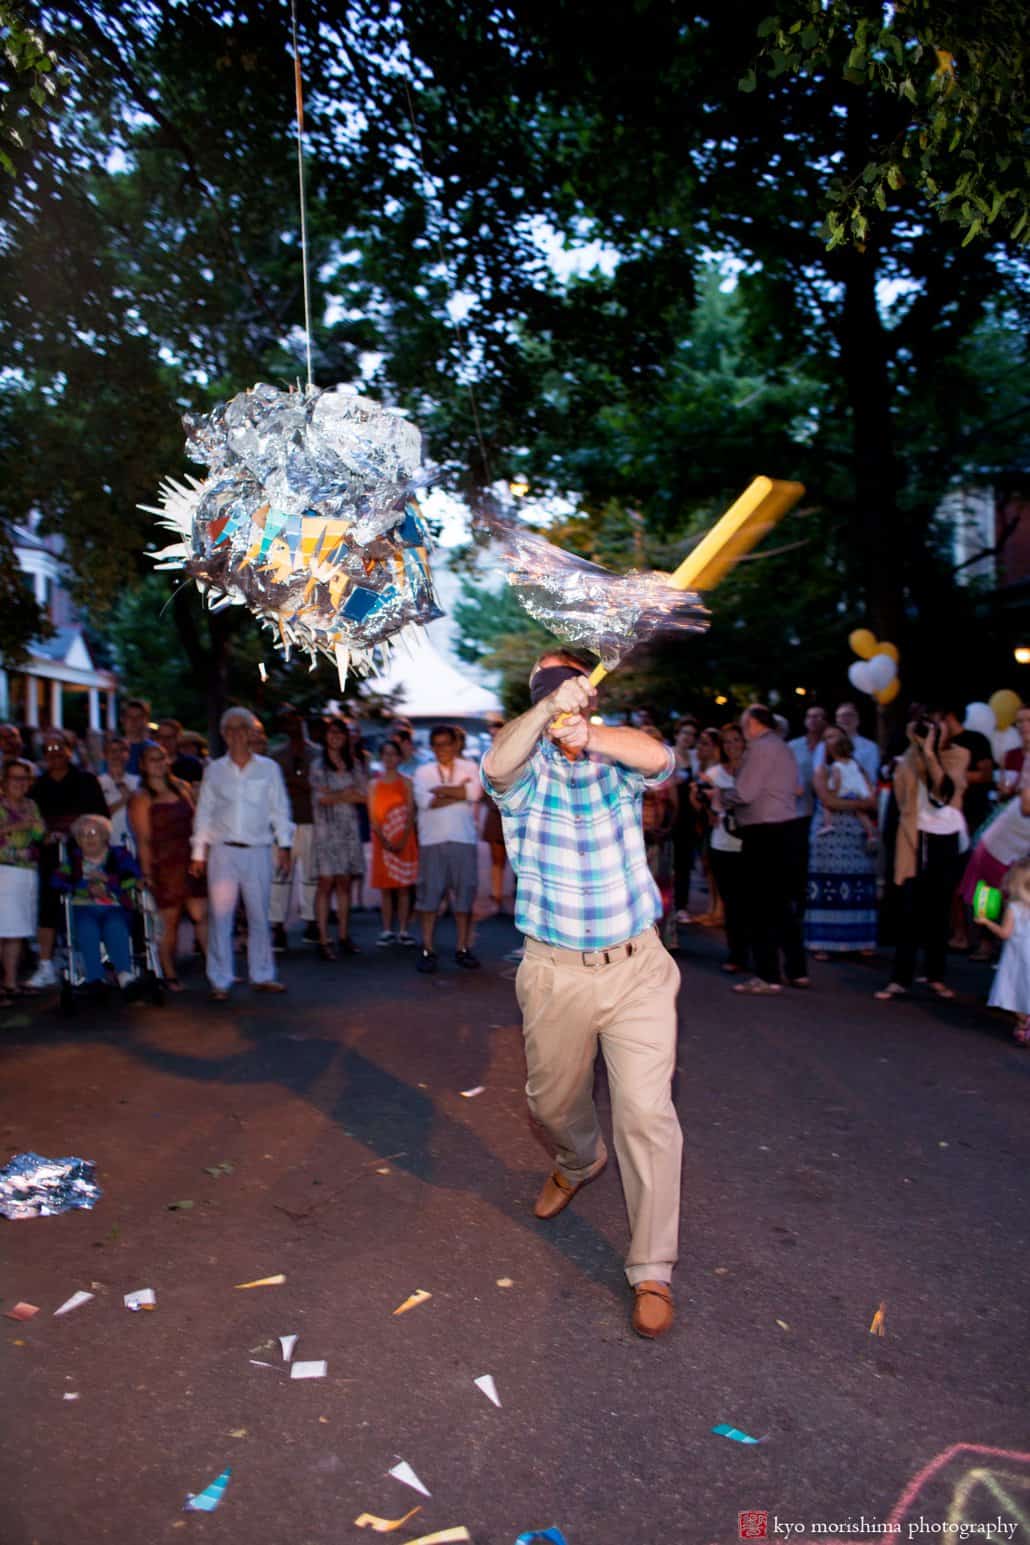 Man hits the pinata at West Philadelphia block party wedding photographed by Kyo Morishima